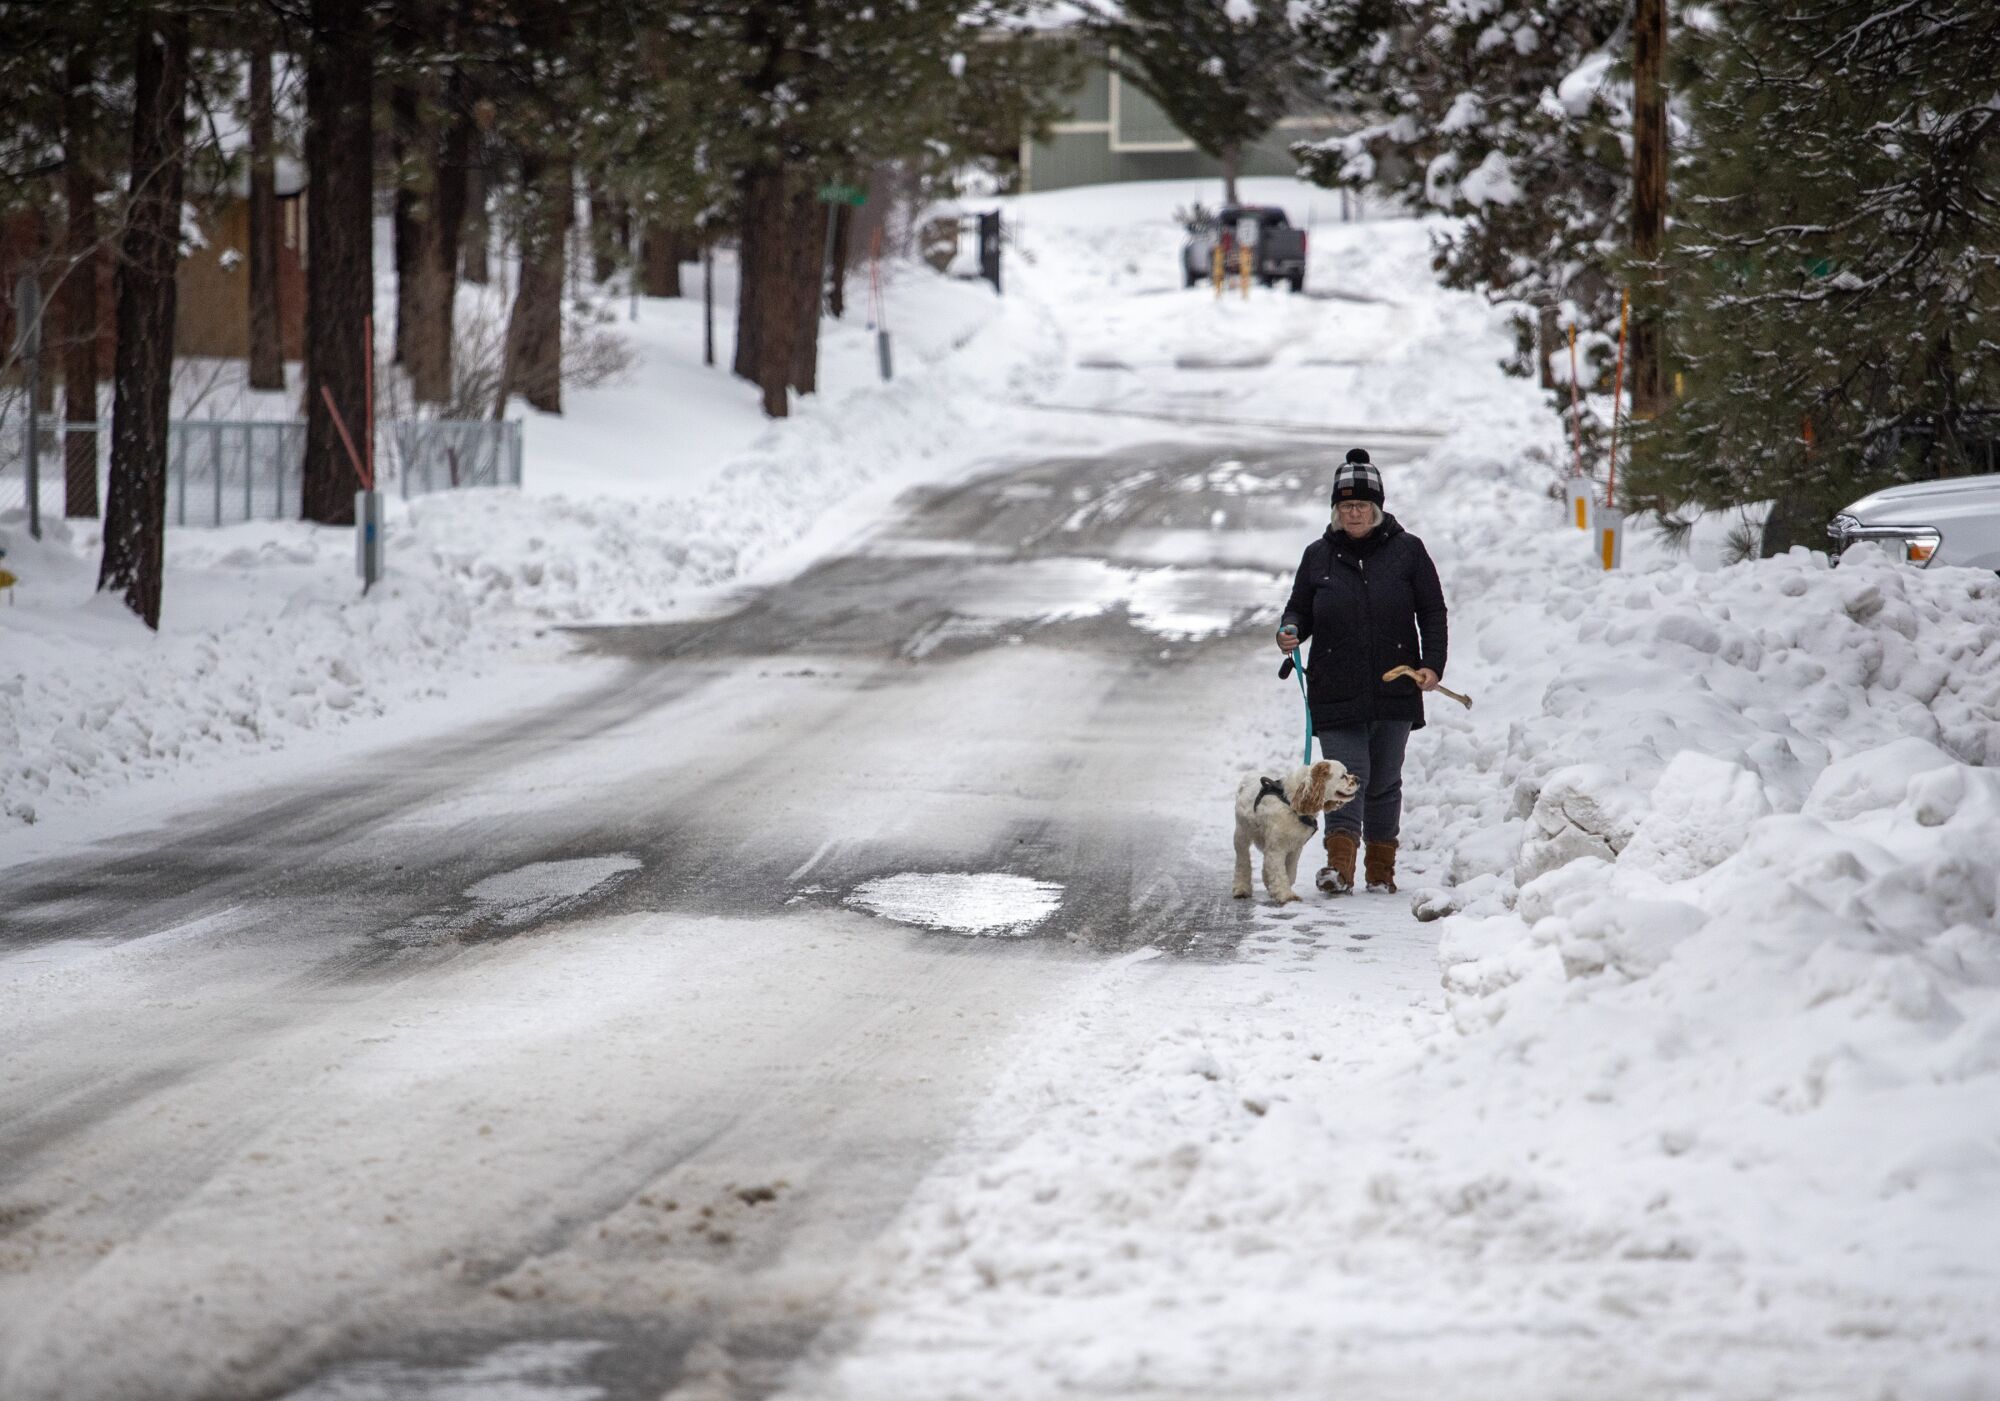 Karen Brianza walks her dog on an icy street in Big Bear.